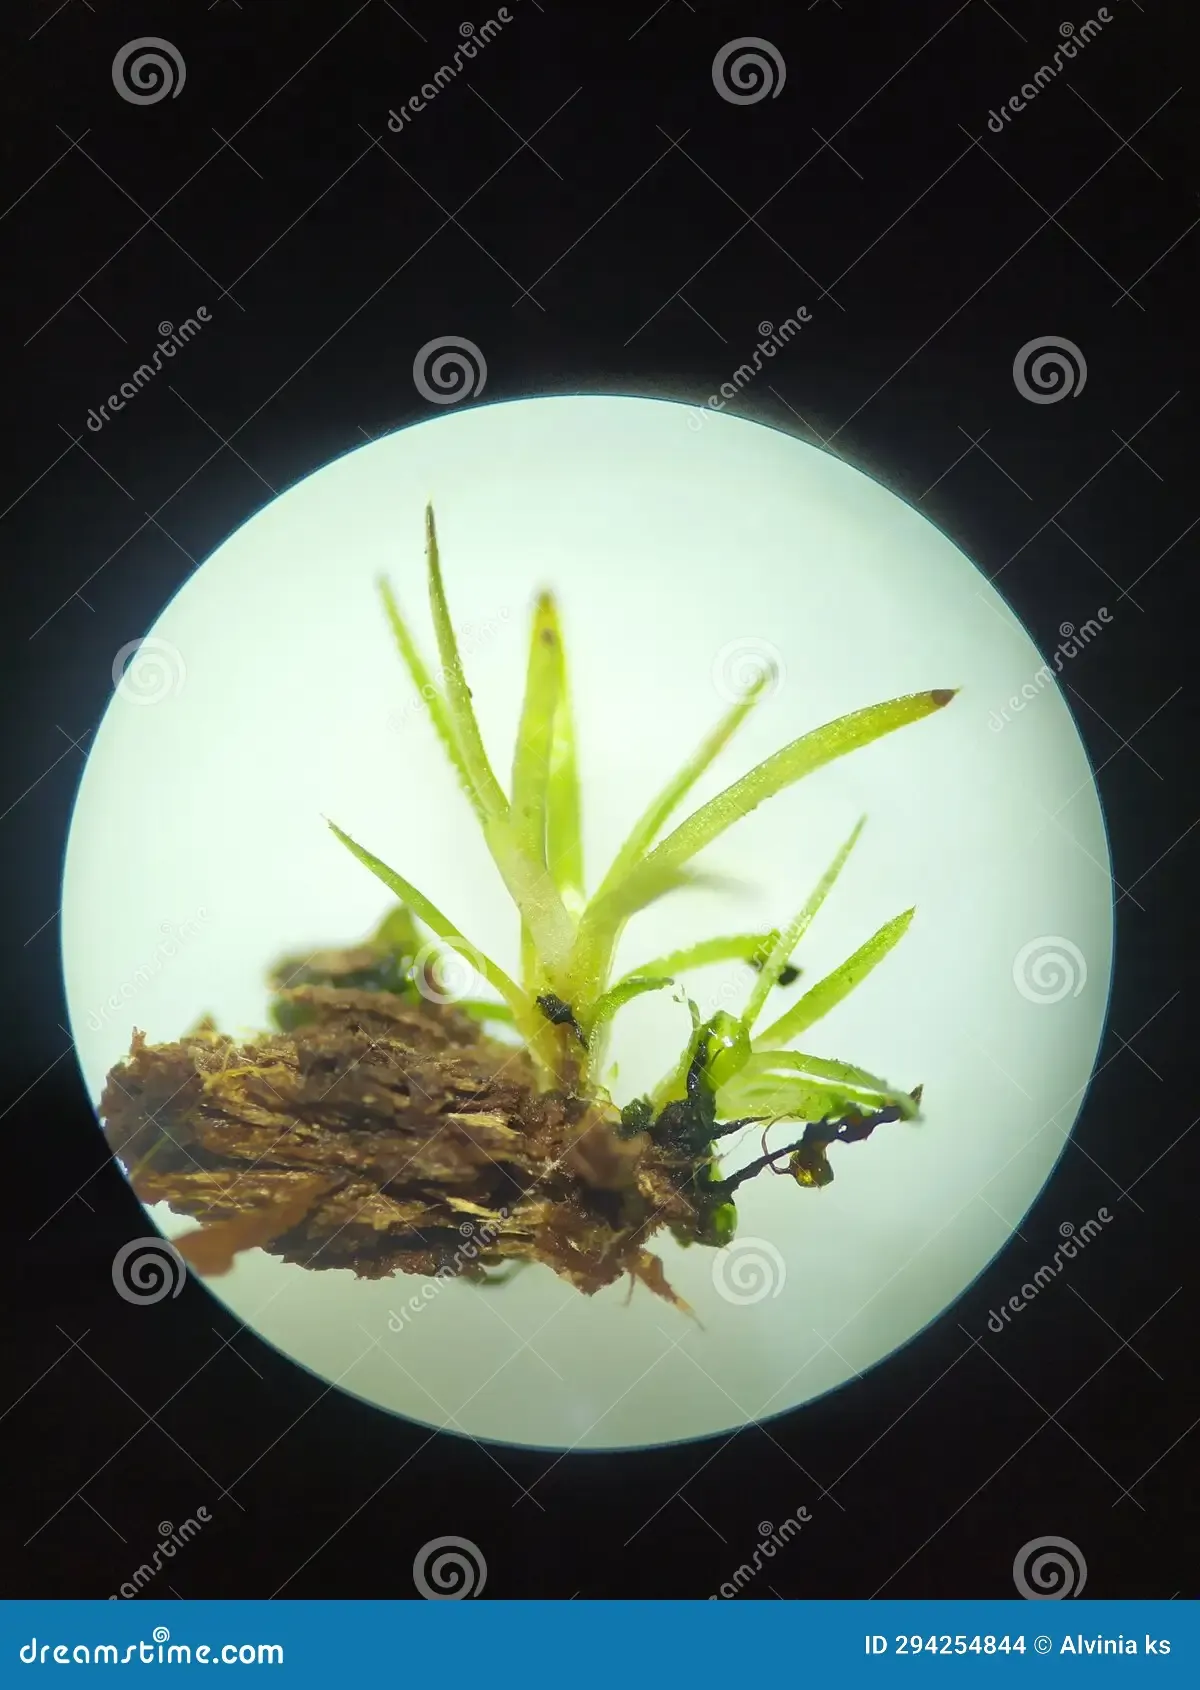 appearance-moss-plant-octoblepharum-albidum-stereo-microscope-294254844.jpg